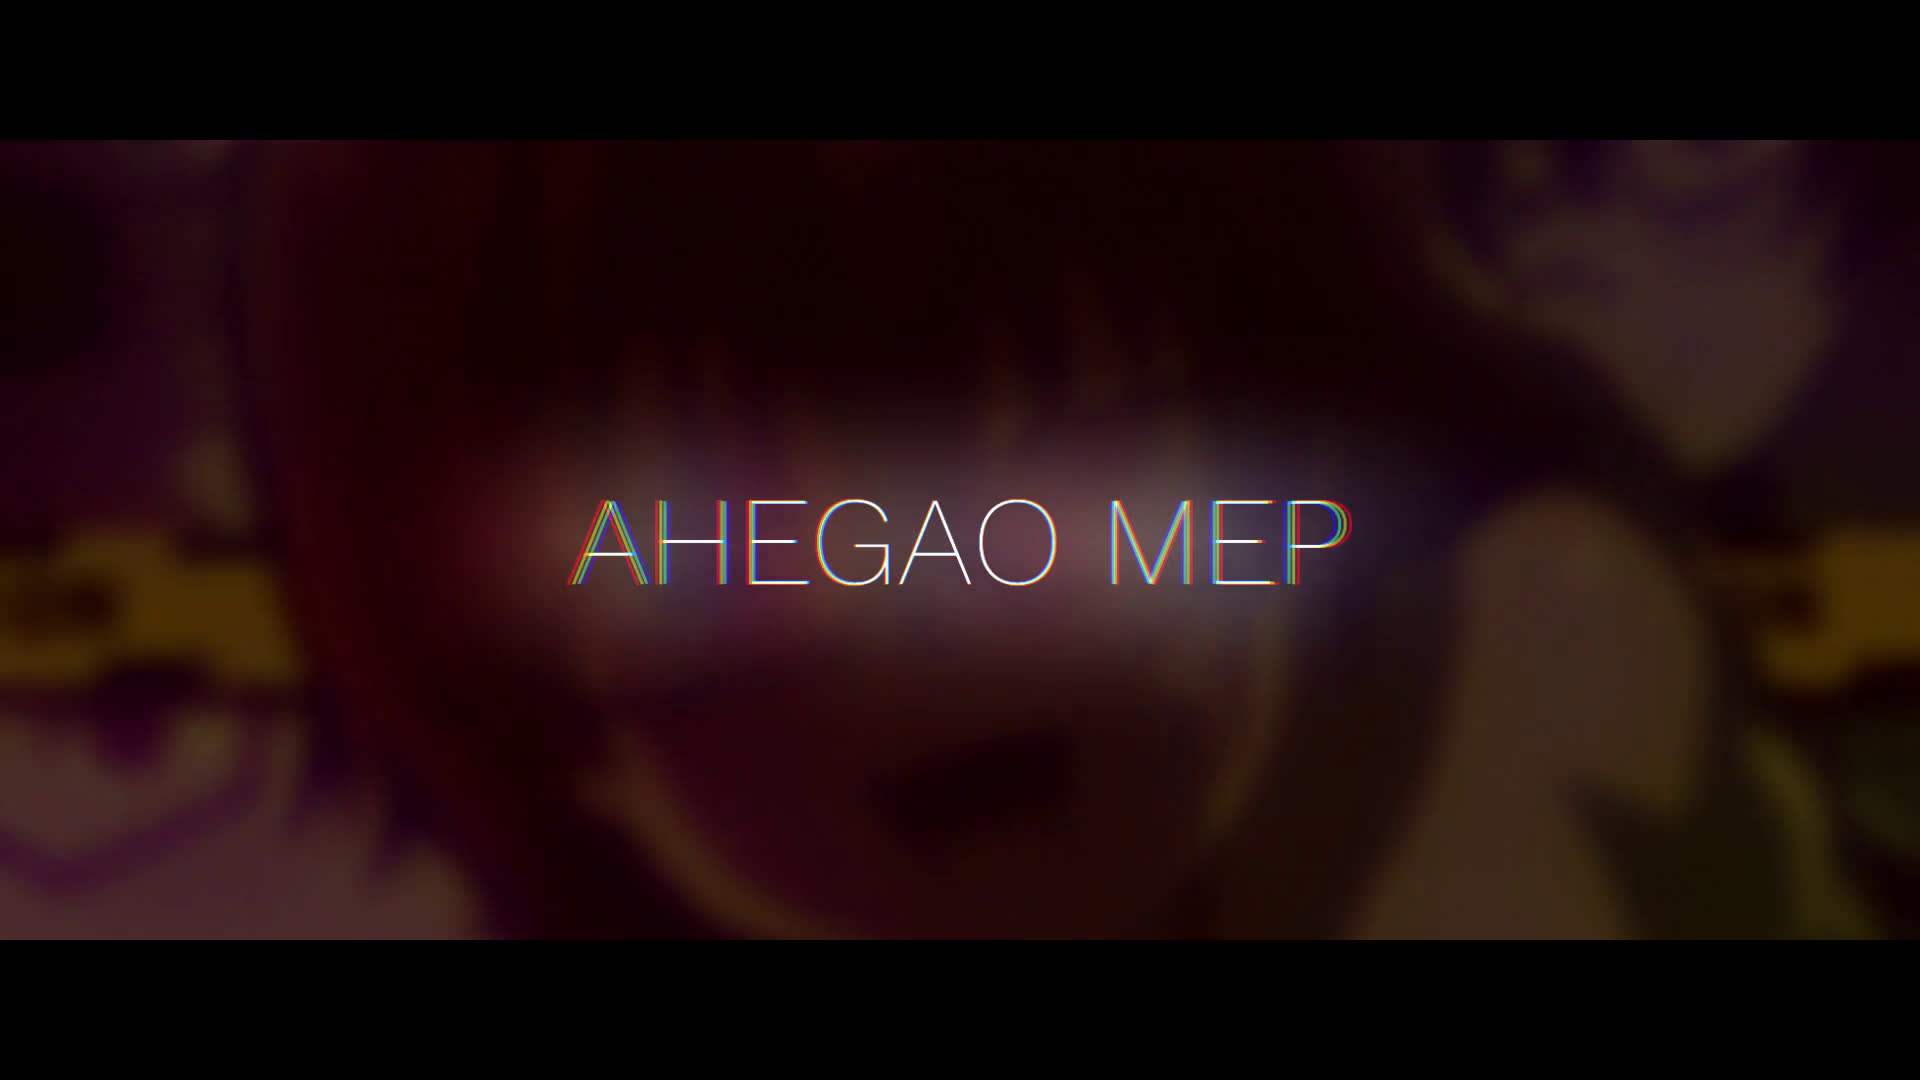 [DarkioHyoton] MEP H Ahegao Abunai Contest 2022